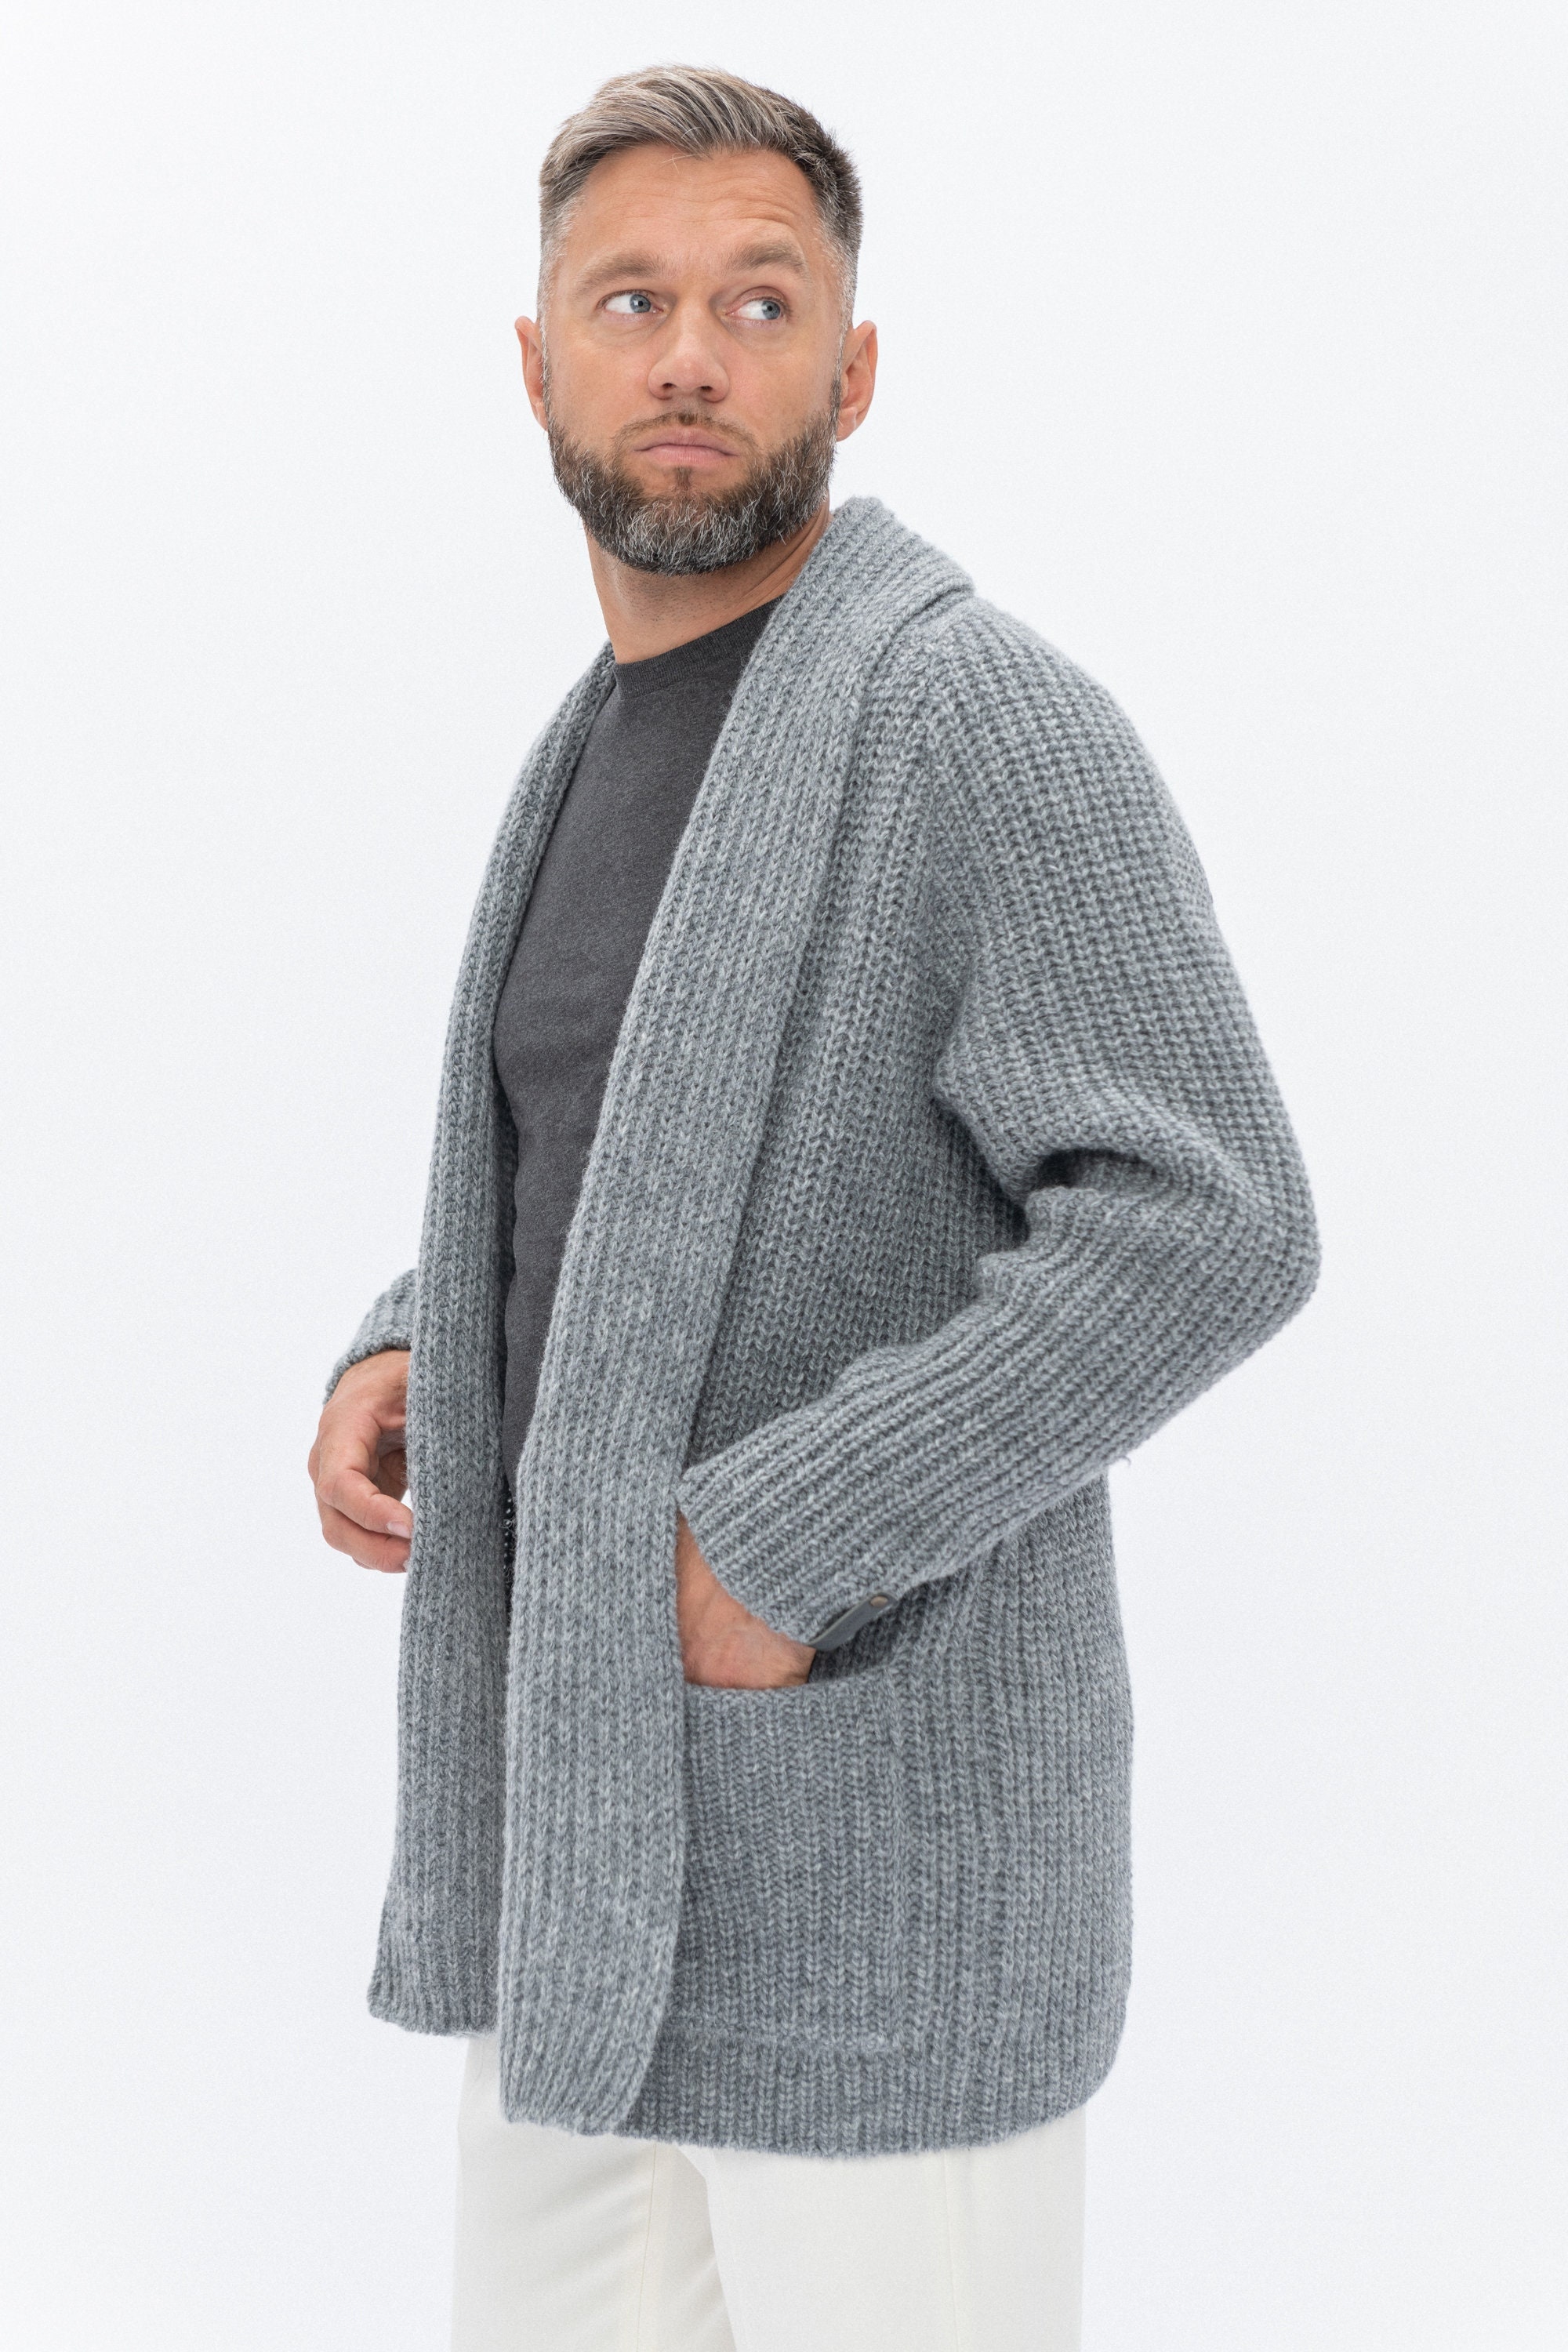 Merino Wool Natural Gray Cardigan for Men, Scandinavian Style Mens Sweater,  Knitted Cardigan With Pockets BENJAMIN 